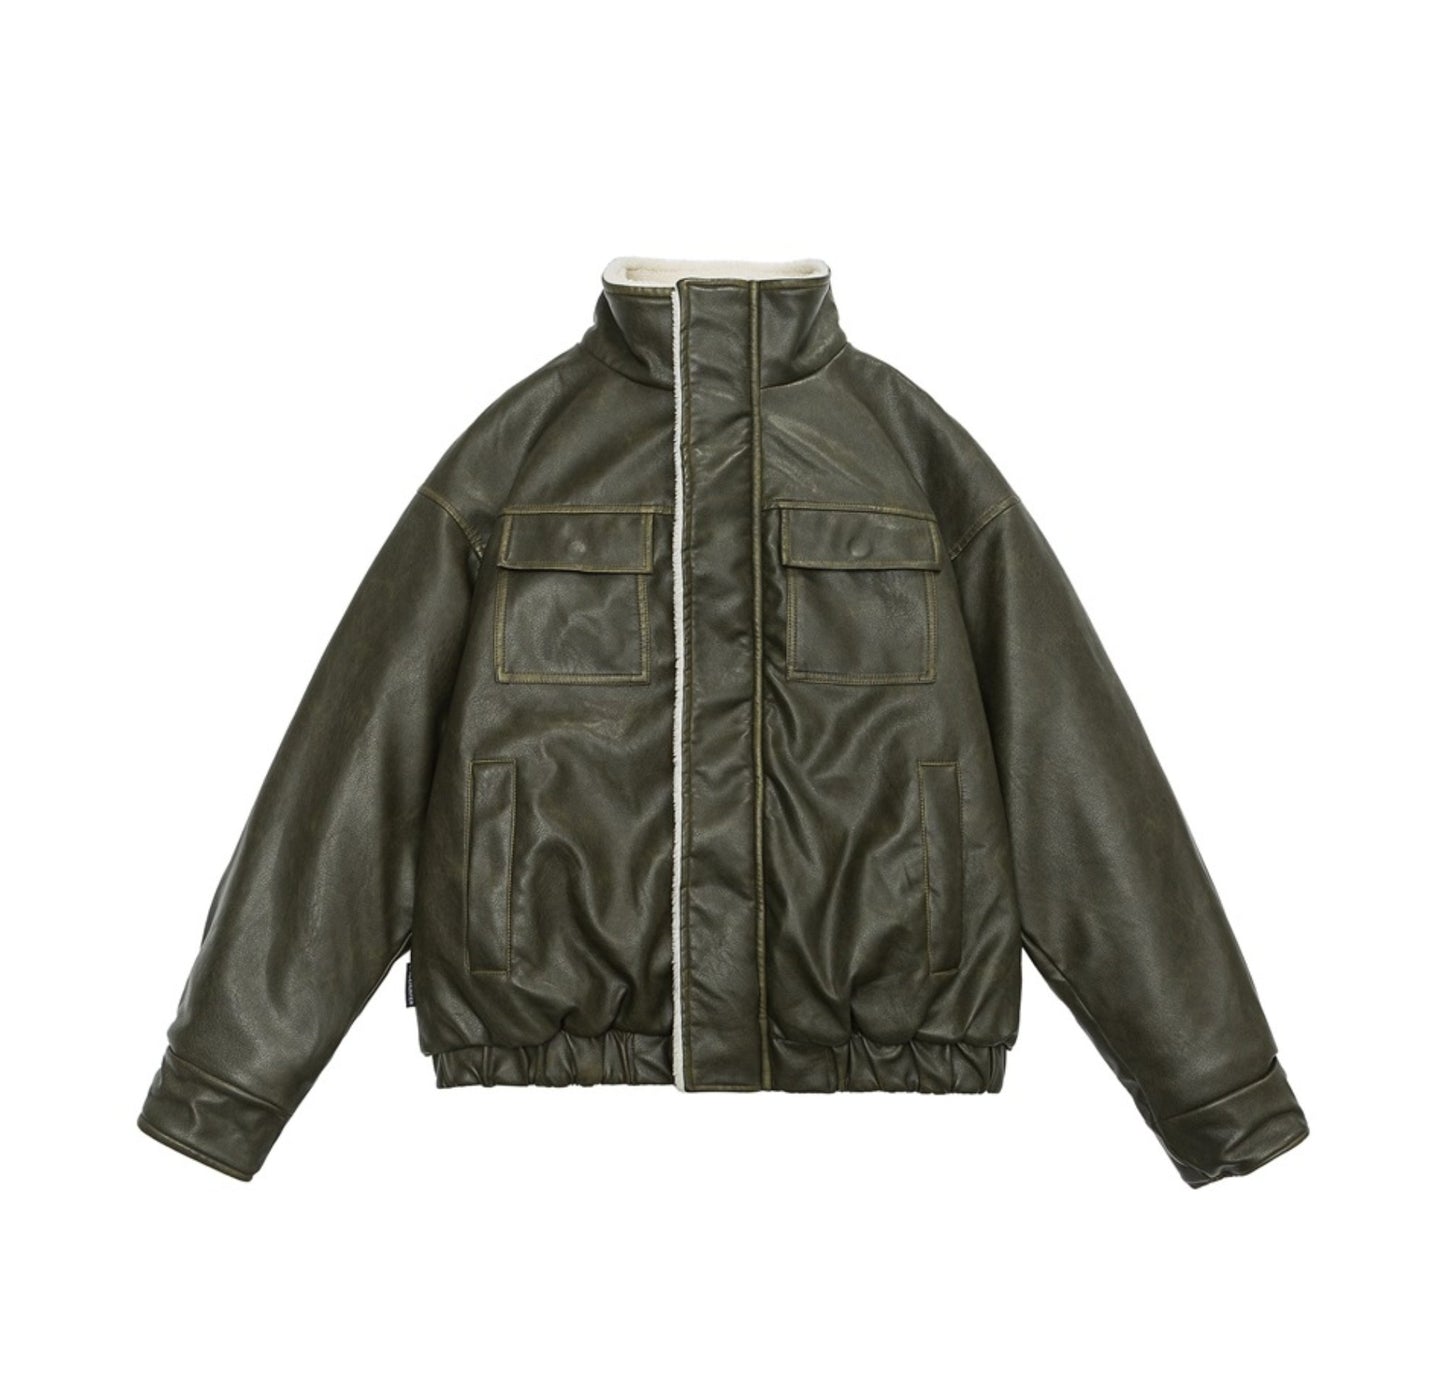 Winter PU Leather Jacket